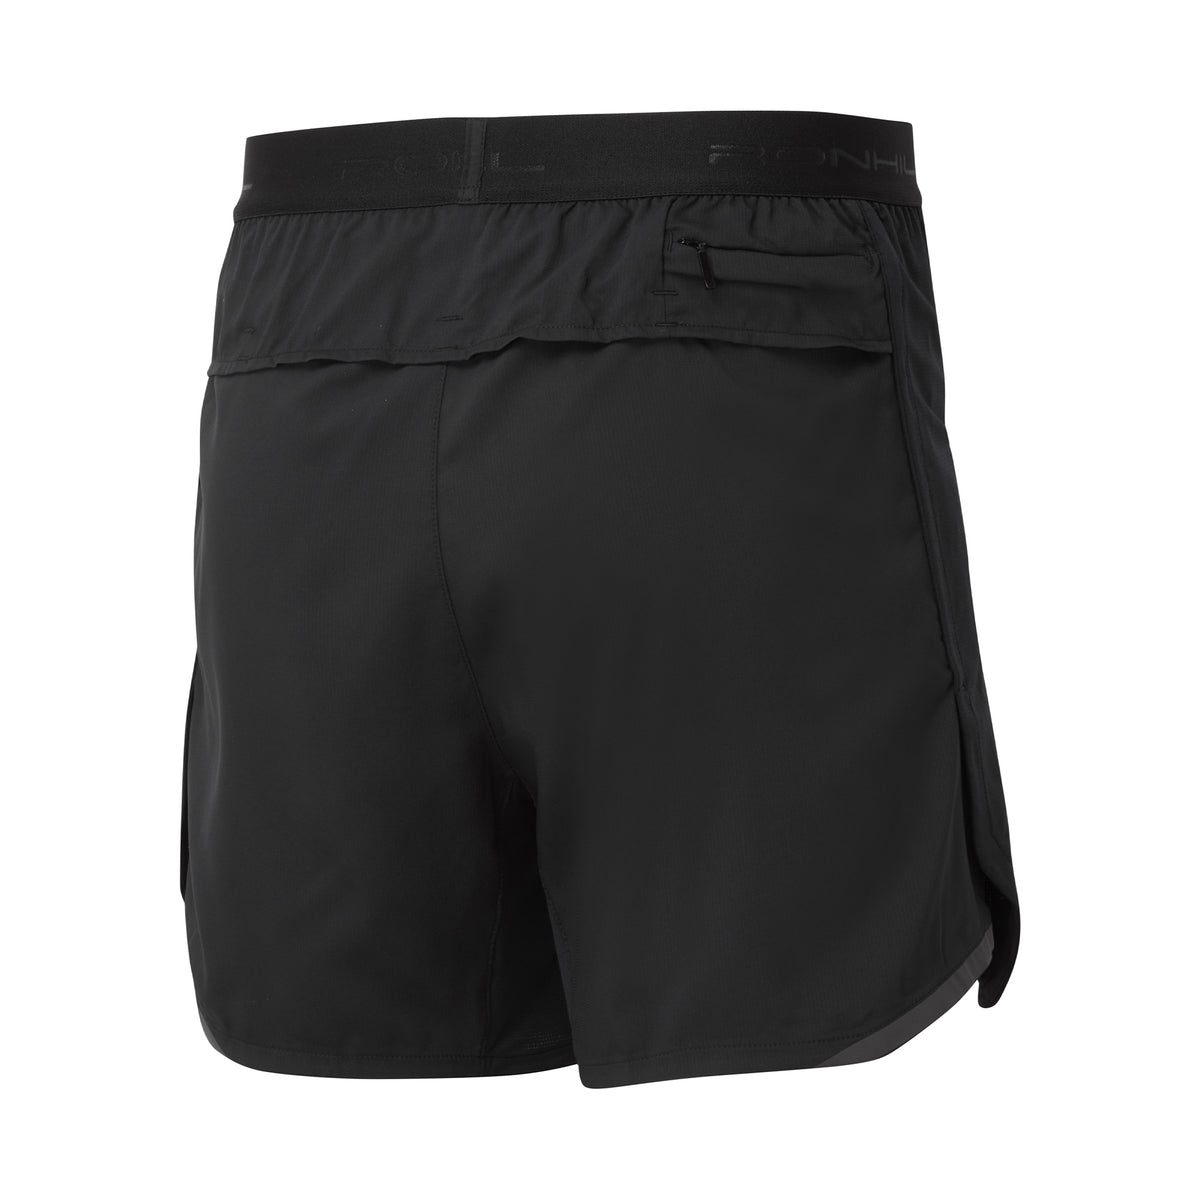 Ronhill Mens Tech Revive 5 inch Shorts: Black